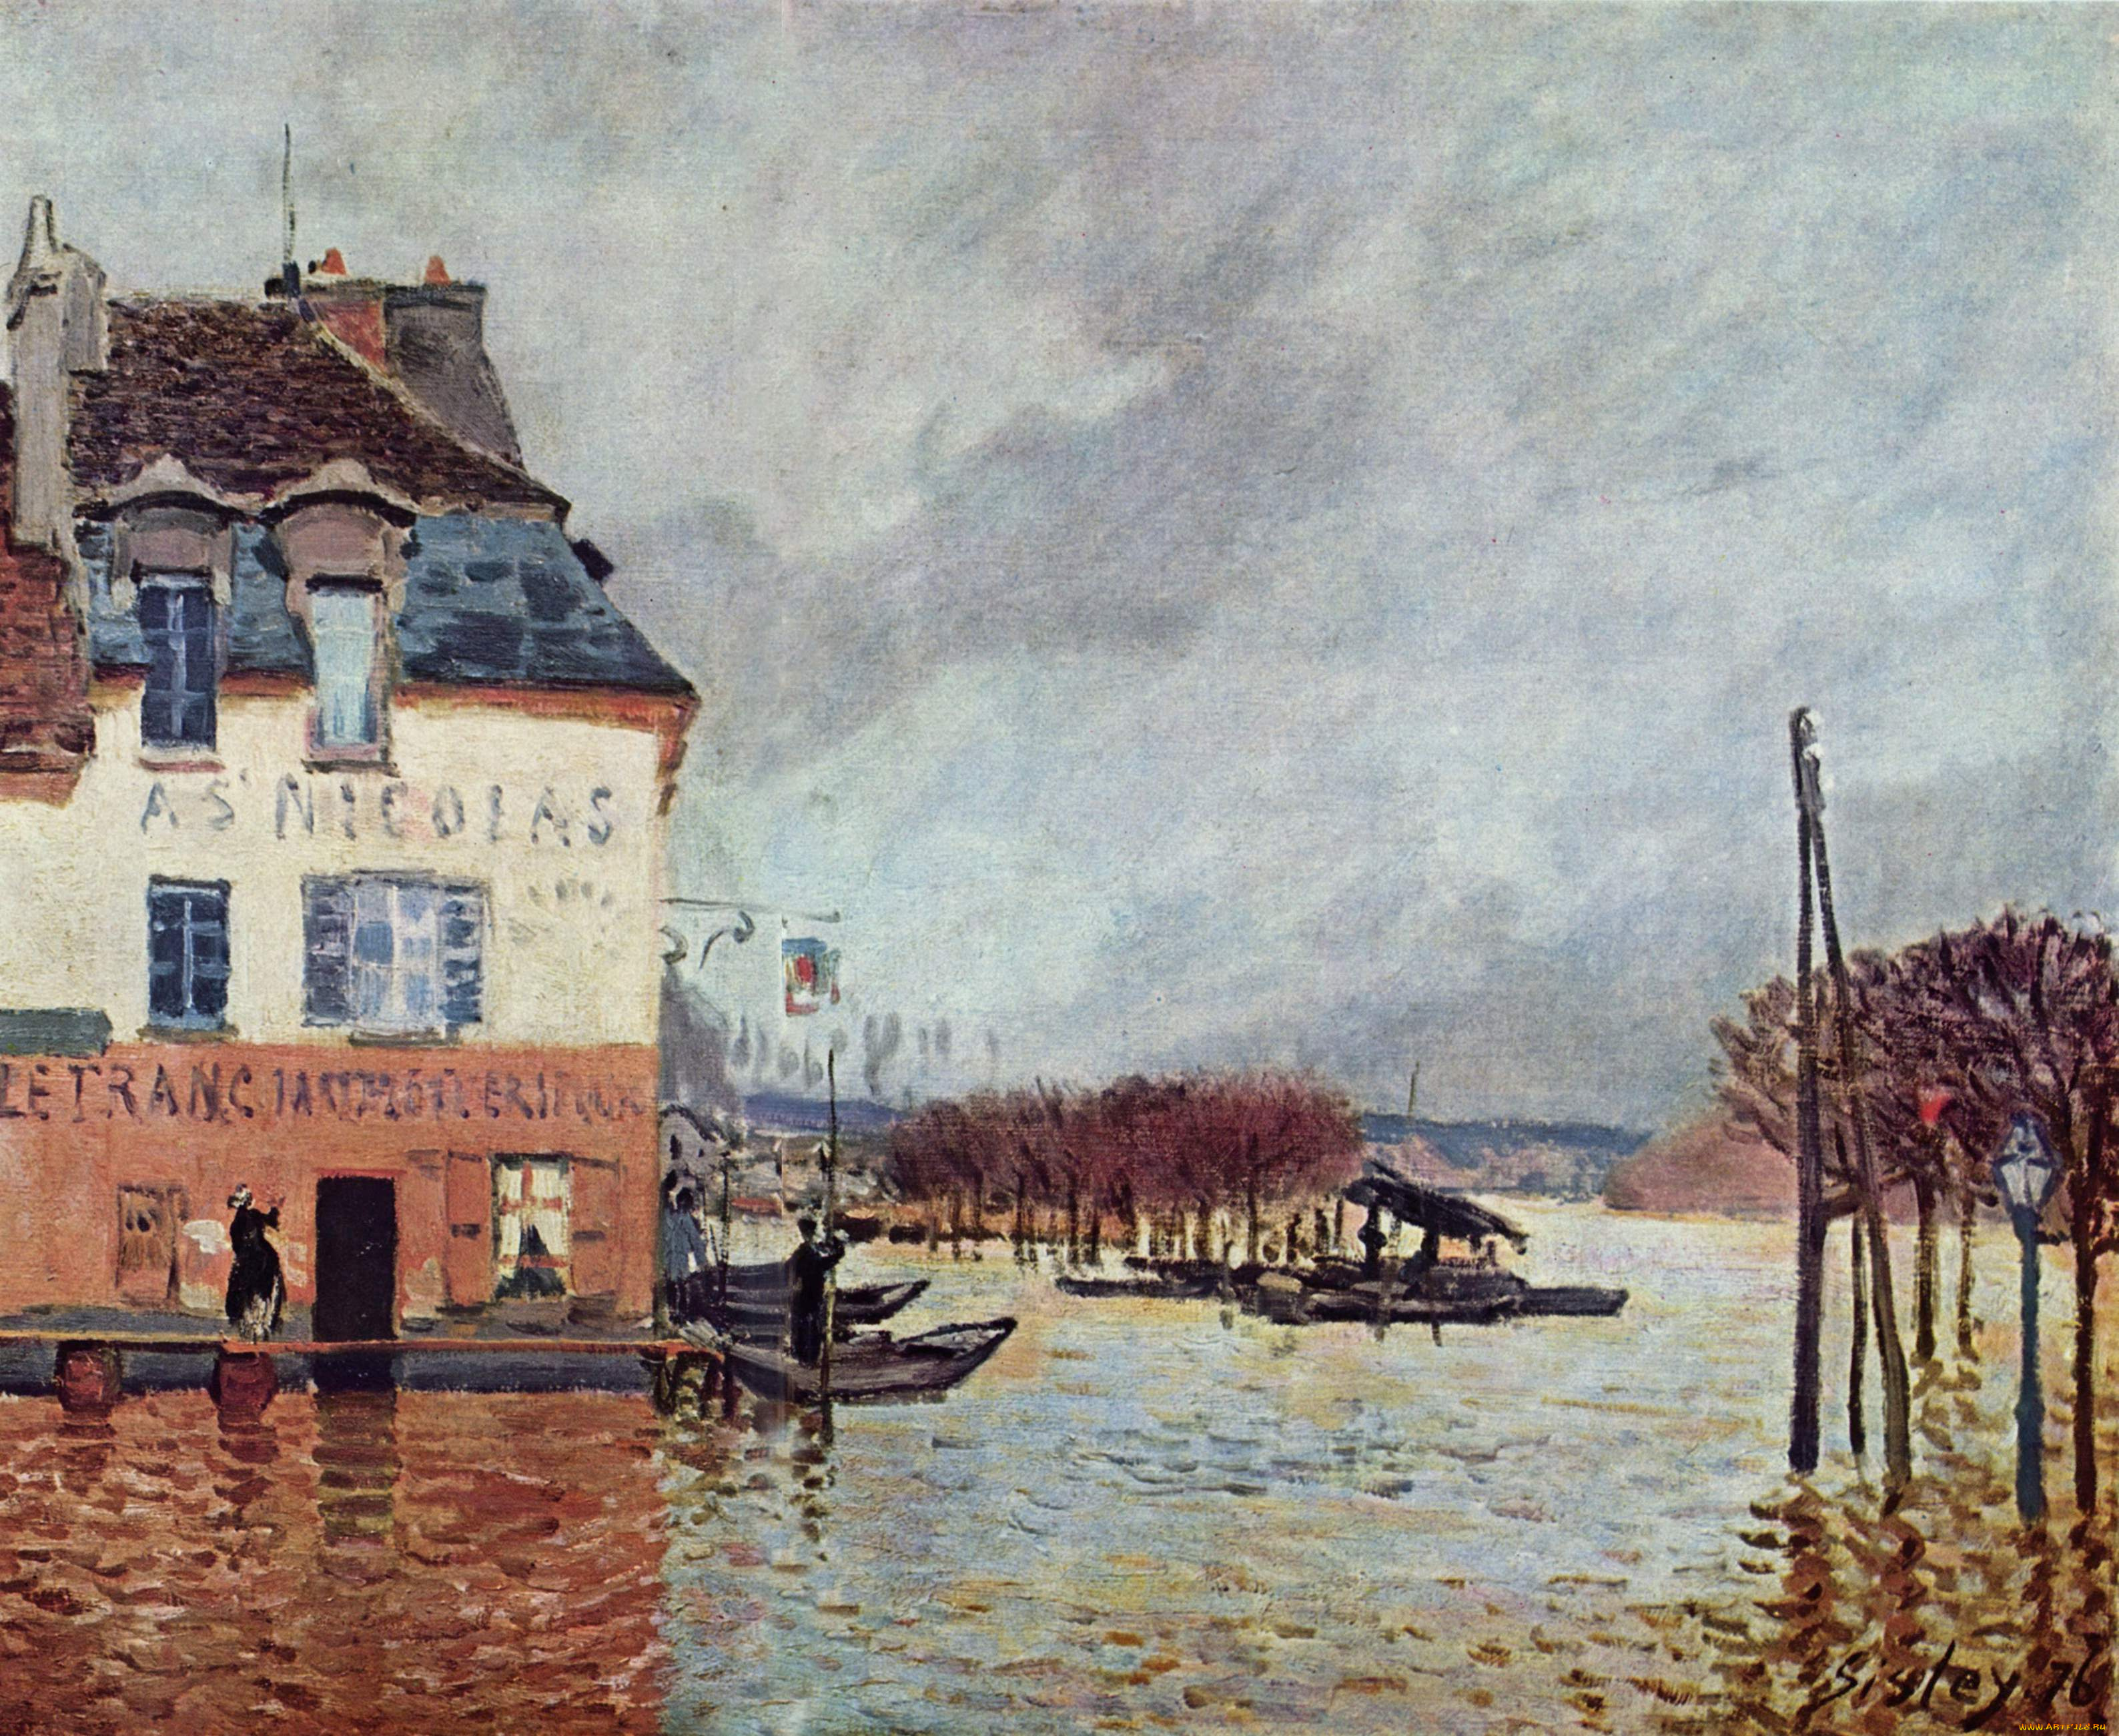 flood, at, port-marly, рисованное, alfred, sisley, здание, люди, лодки, наводнение, деревья